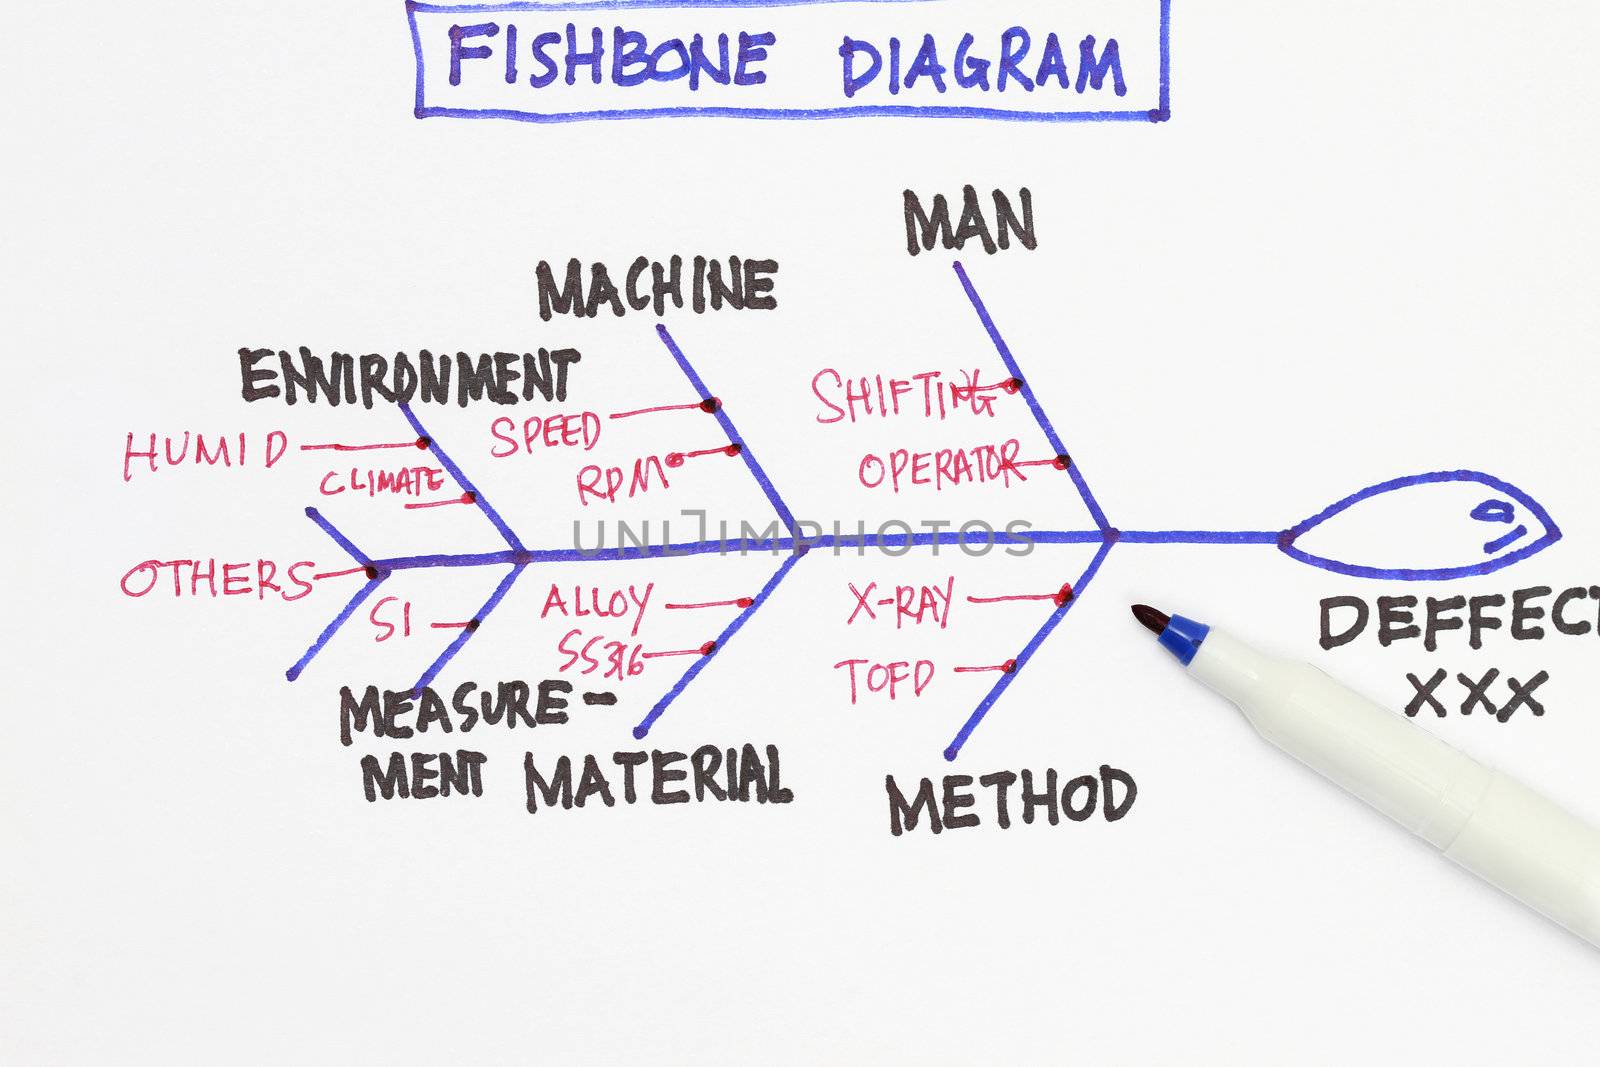 Fishbone diagram by sacatani